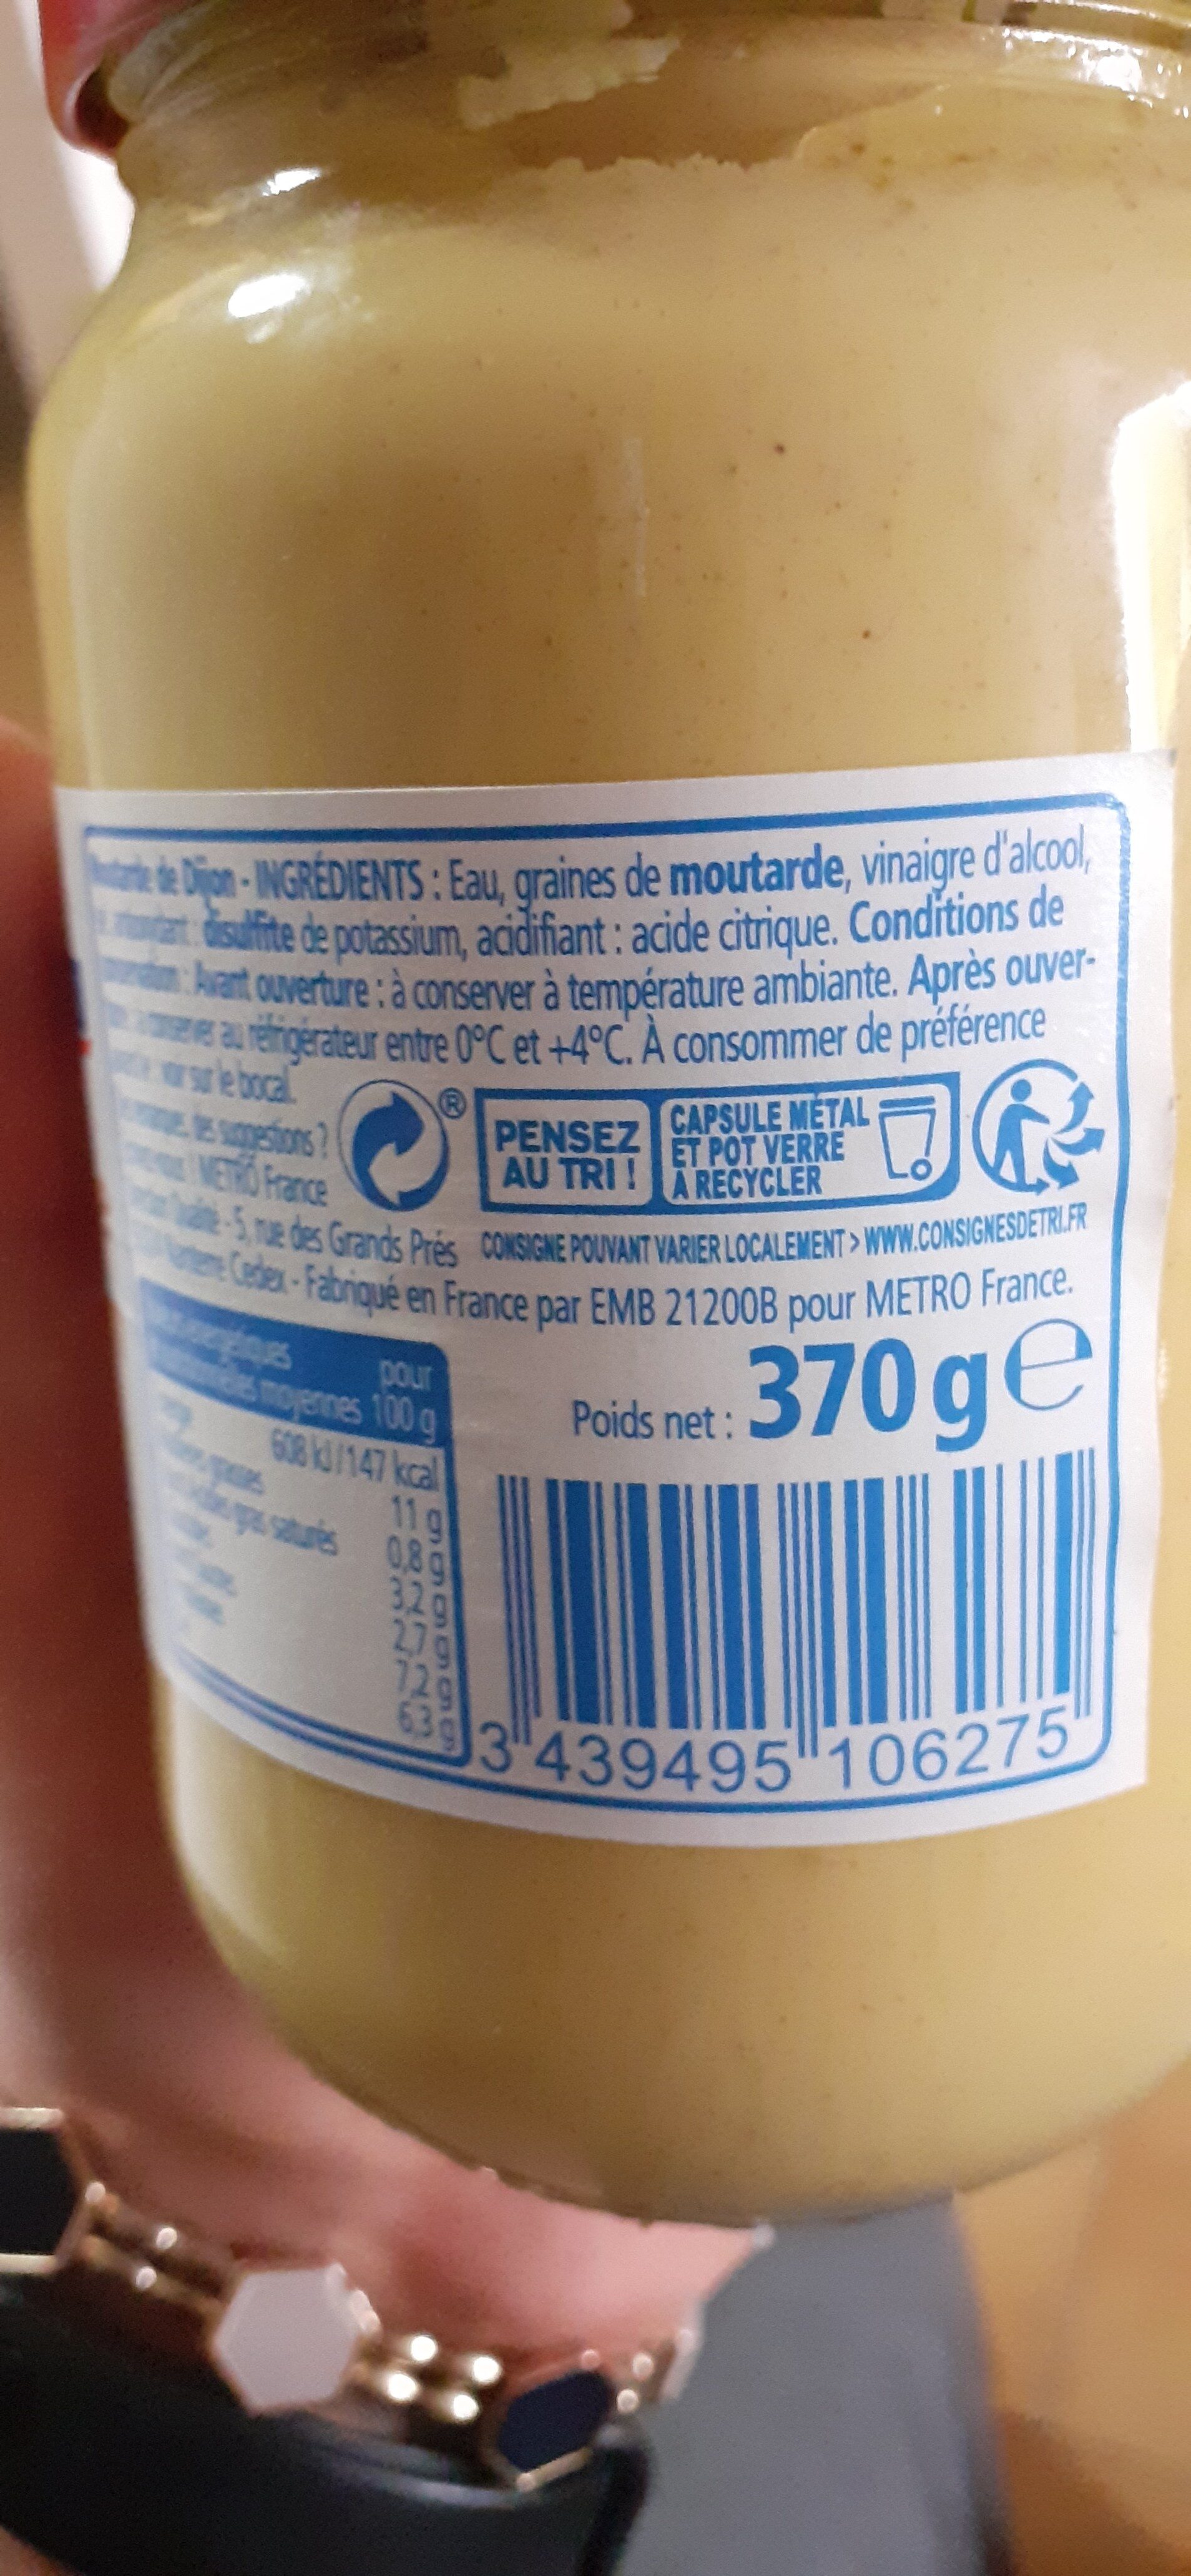 Moutarde de Dijon - Produkt - fr